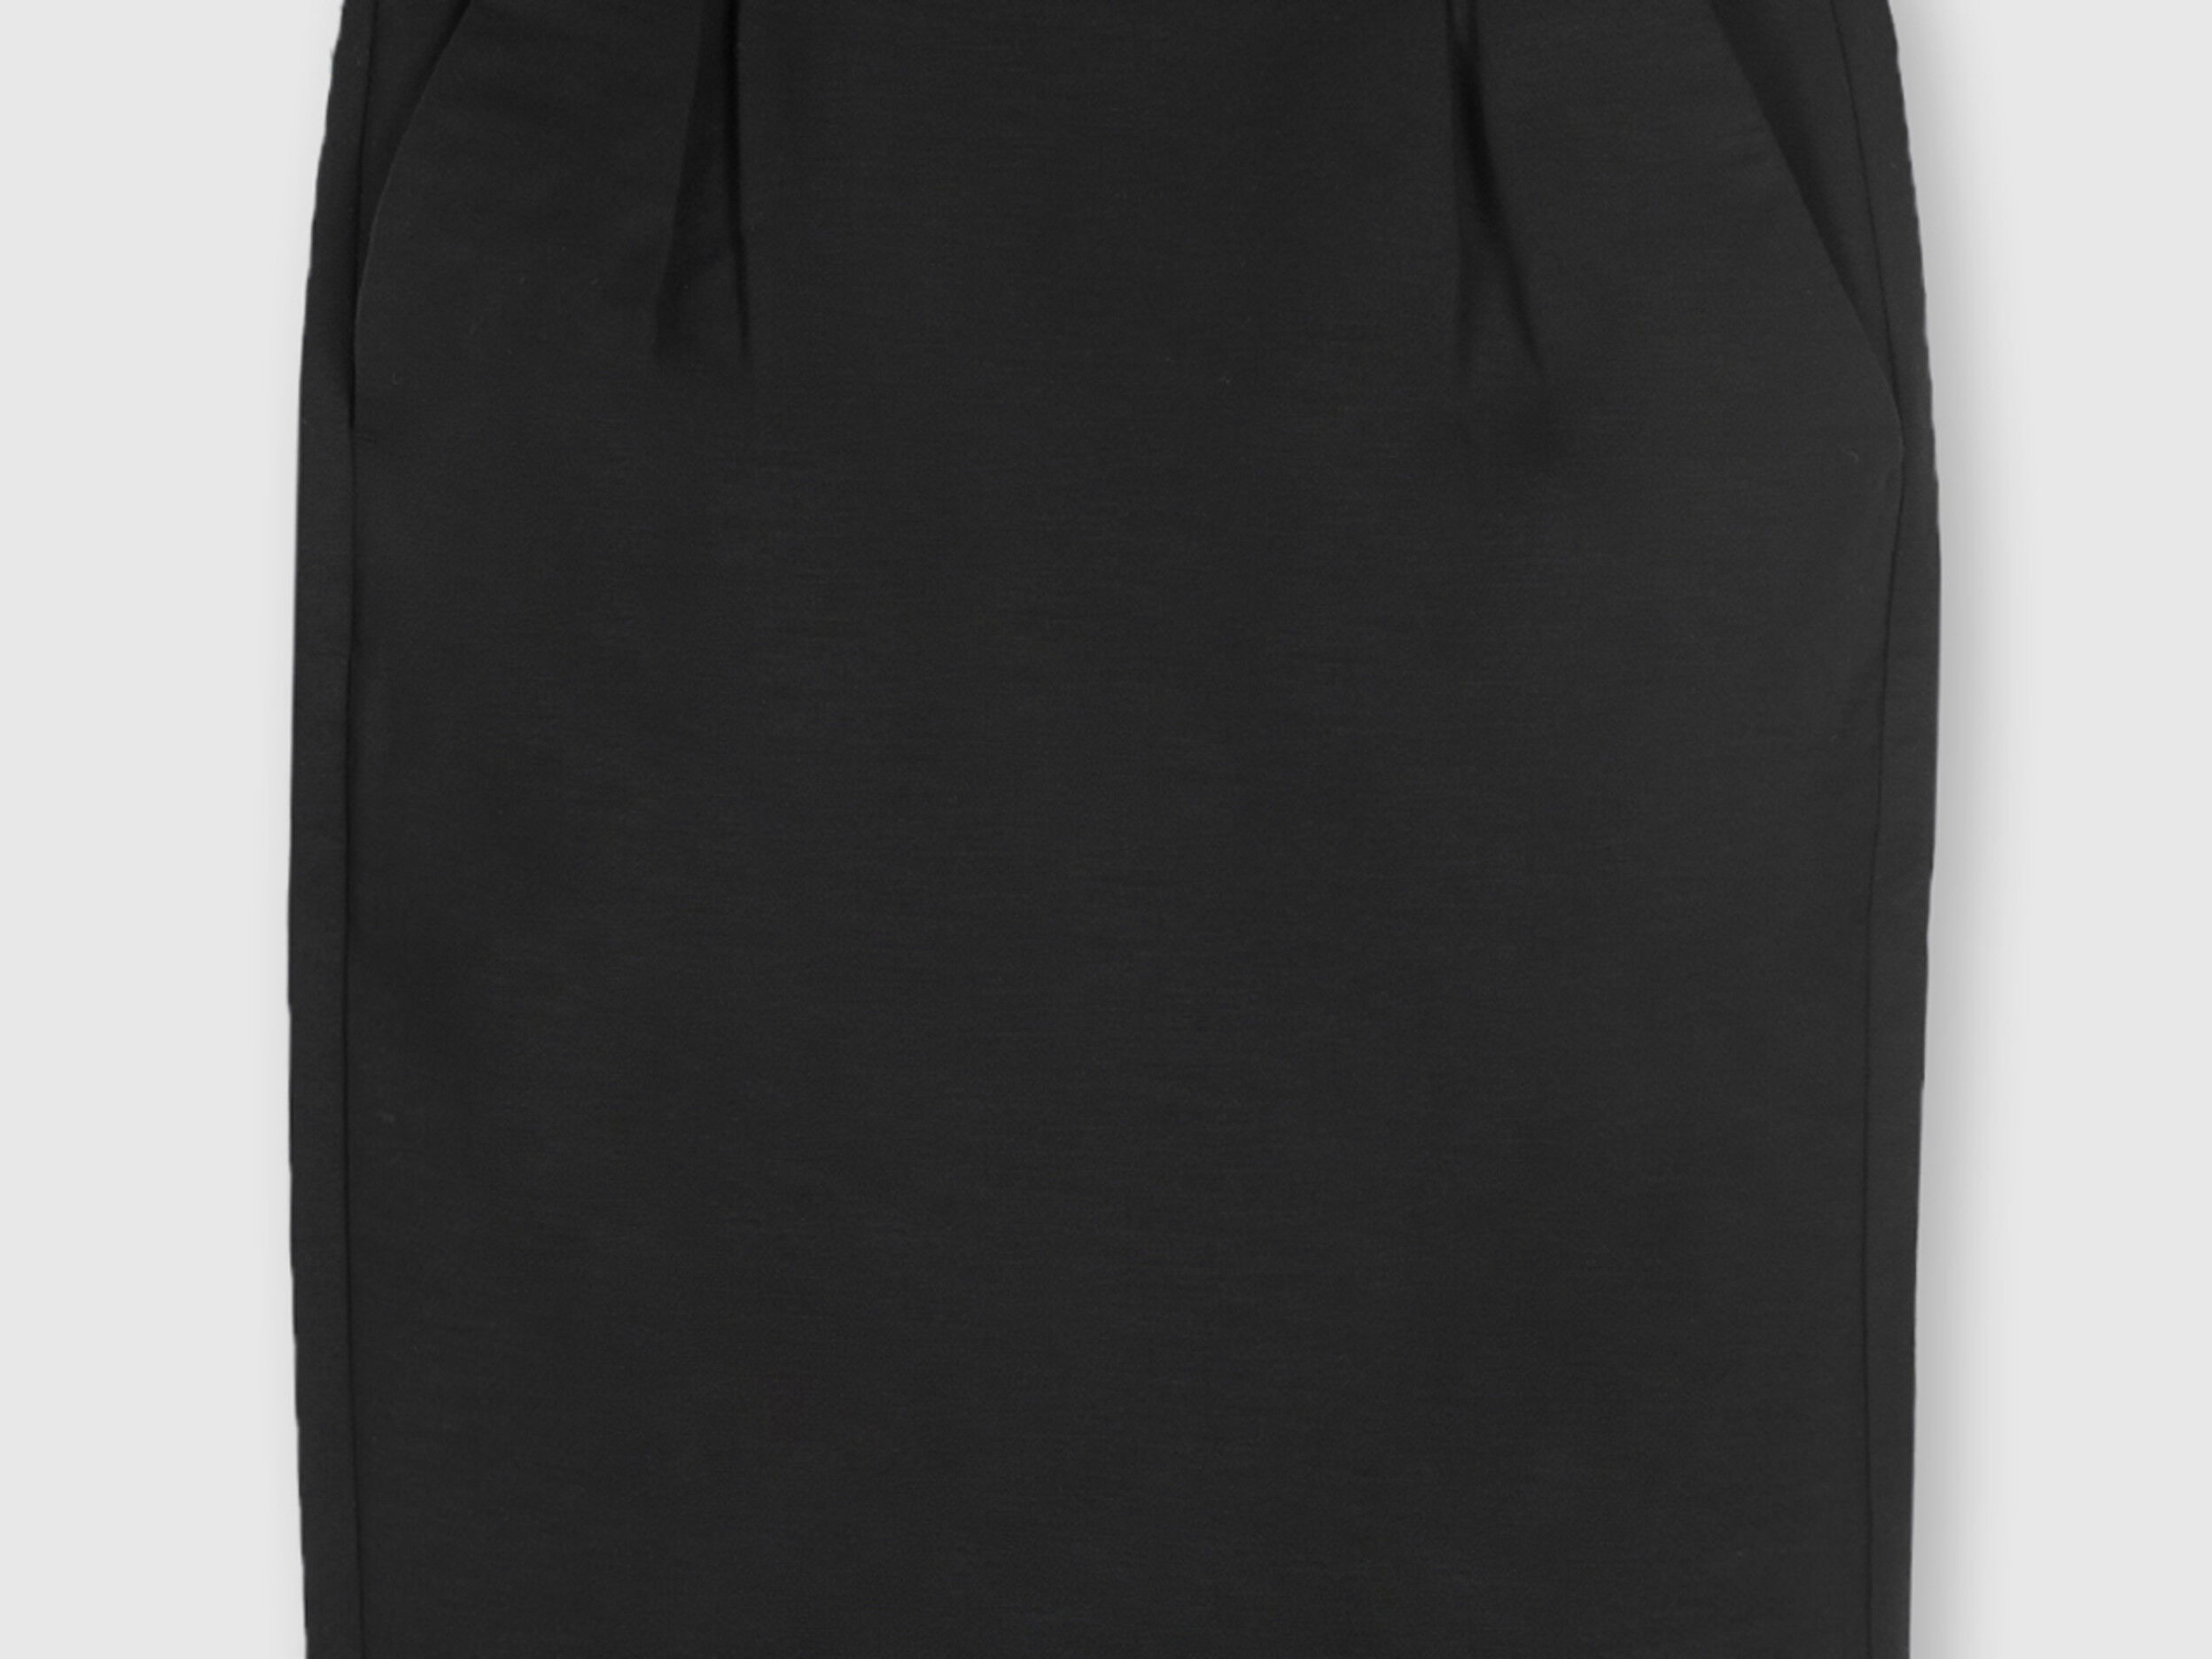 N-Gal Women Lycra Wrap Bodycon Club Mini Skirt at Rs 160/piece in Noida |  ID: 2851584672012